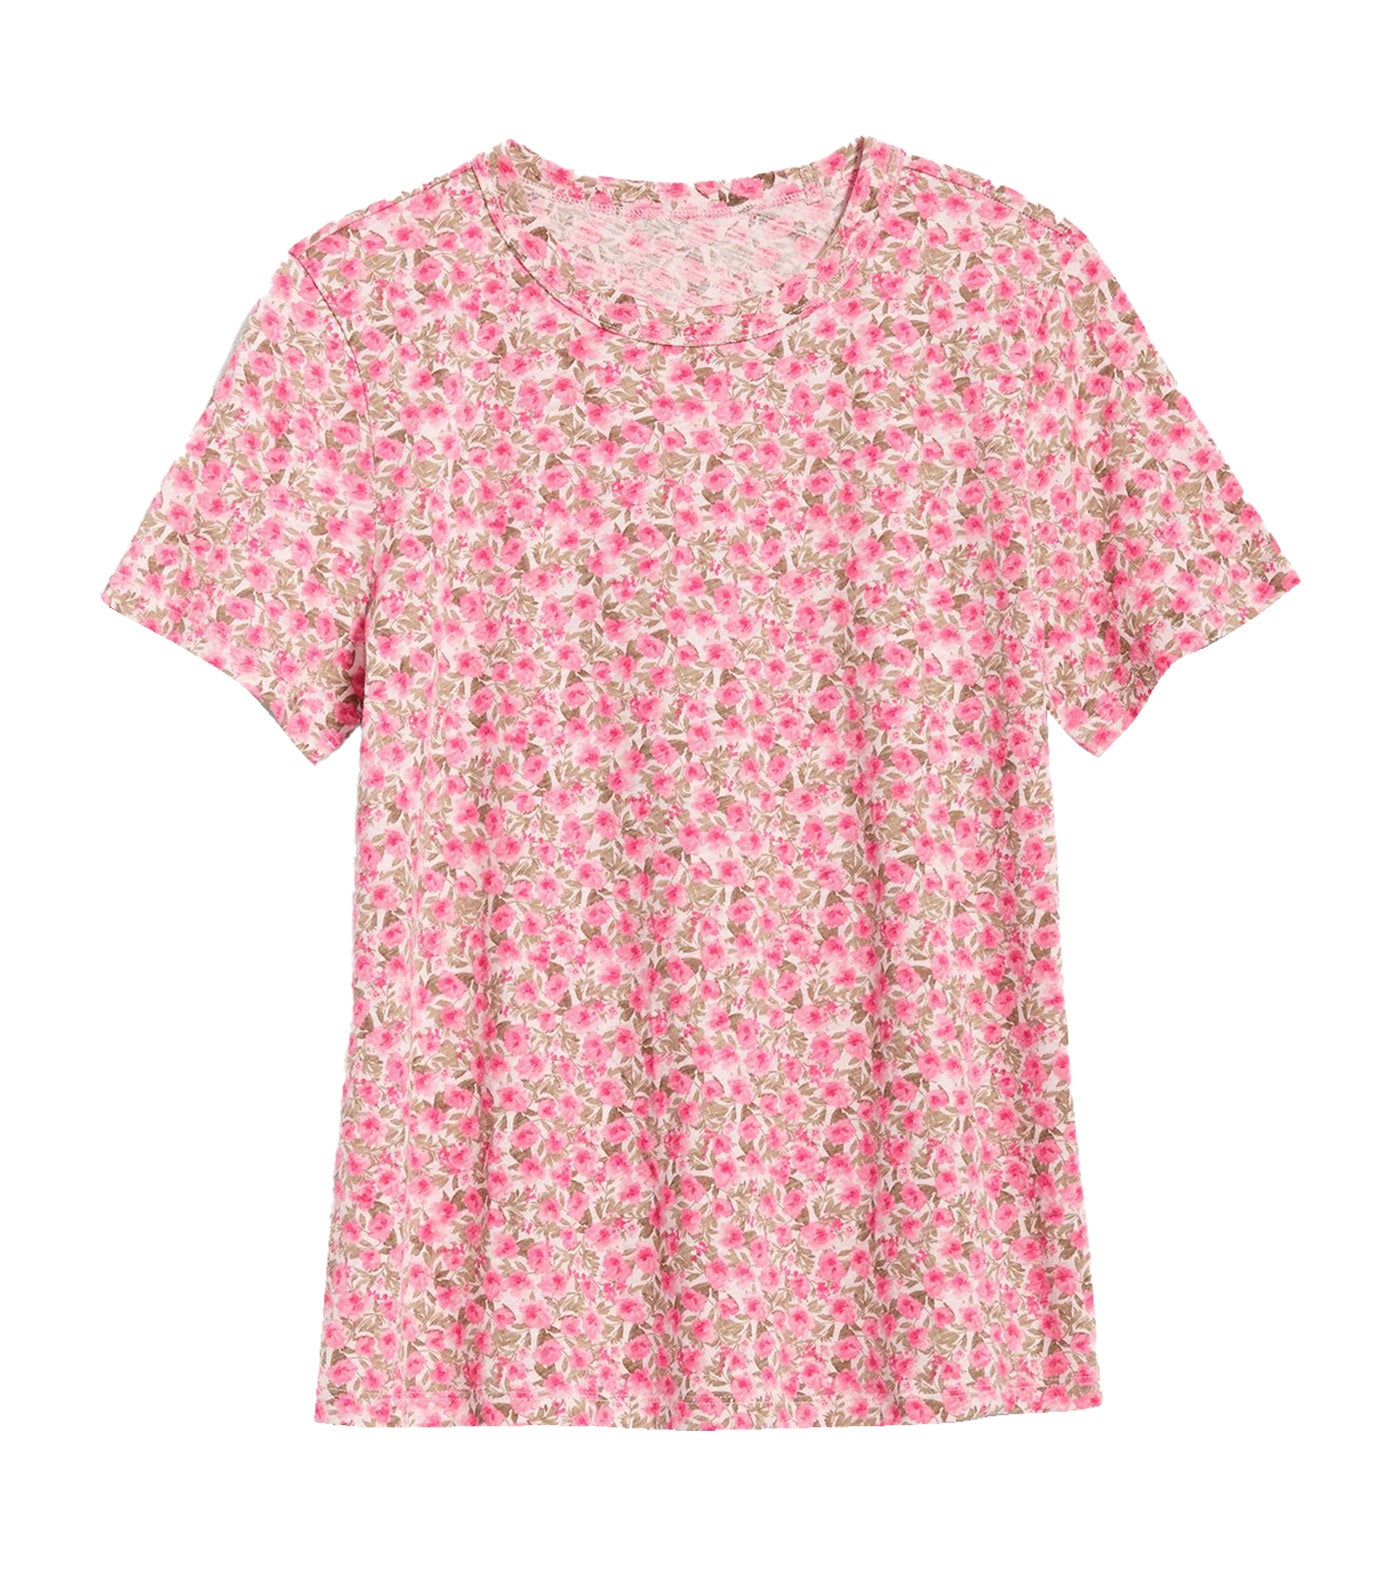 EveryWear Printed Slub-Knit T-Shirt for Women Pink Floral Combo